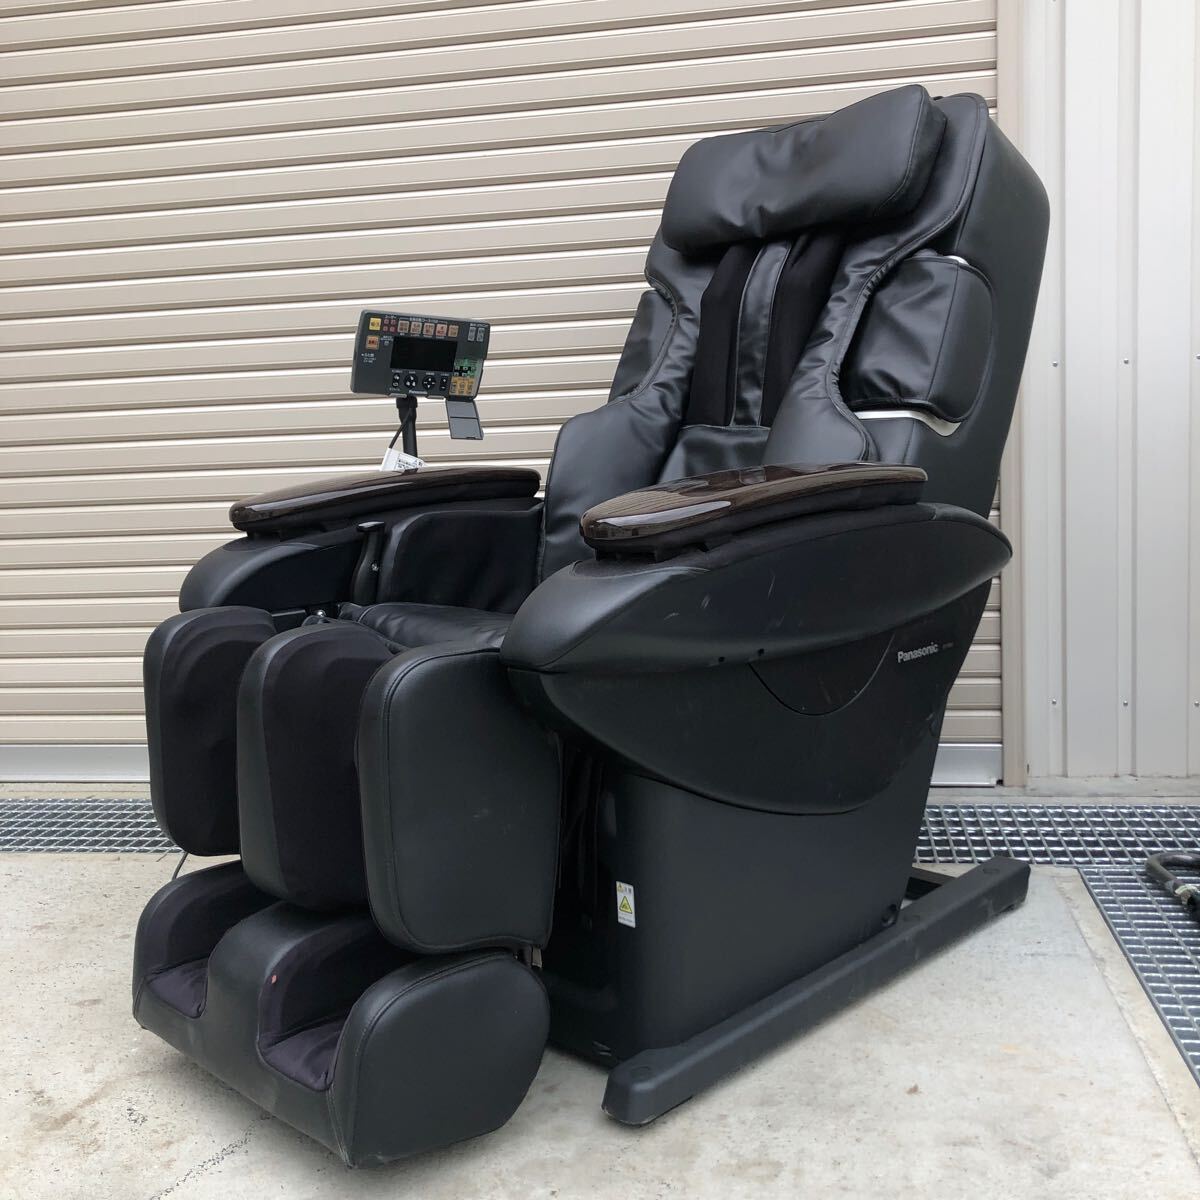 995 Panasonic Panasonic massage chair real Pro EP7000 2010 year made moveable goods setting key lack of 